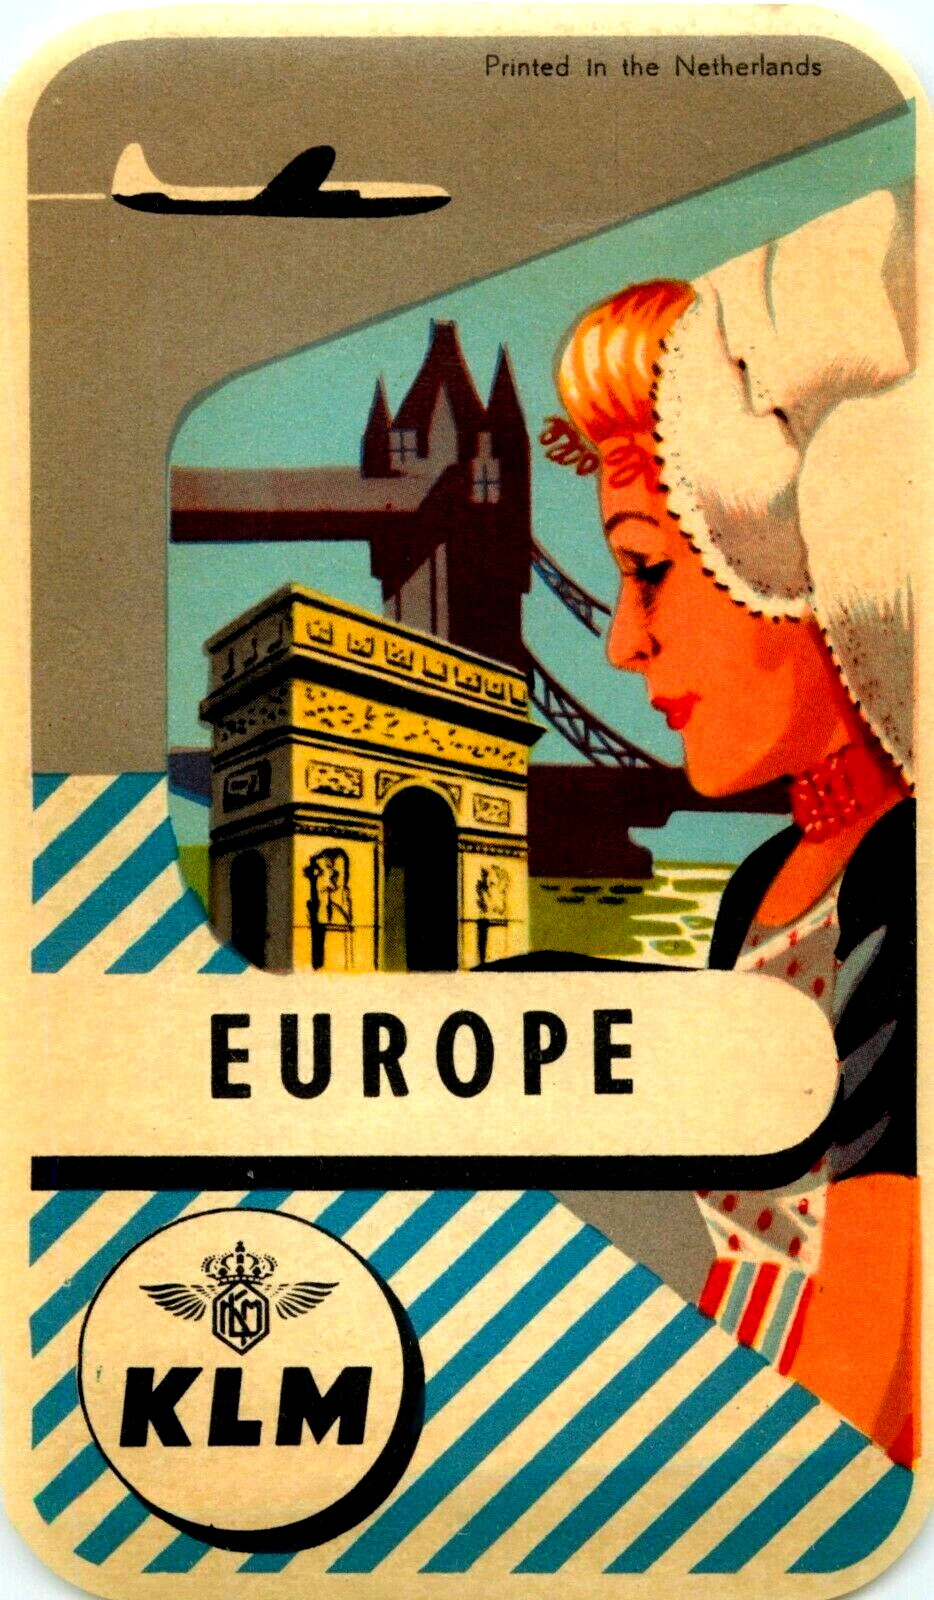 KLM AIRLINE to EUROPE - Beautiful / ORIGINAL Luggage Label, c. 1955